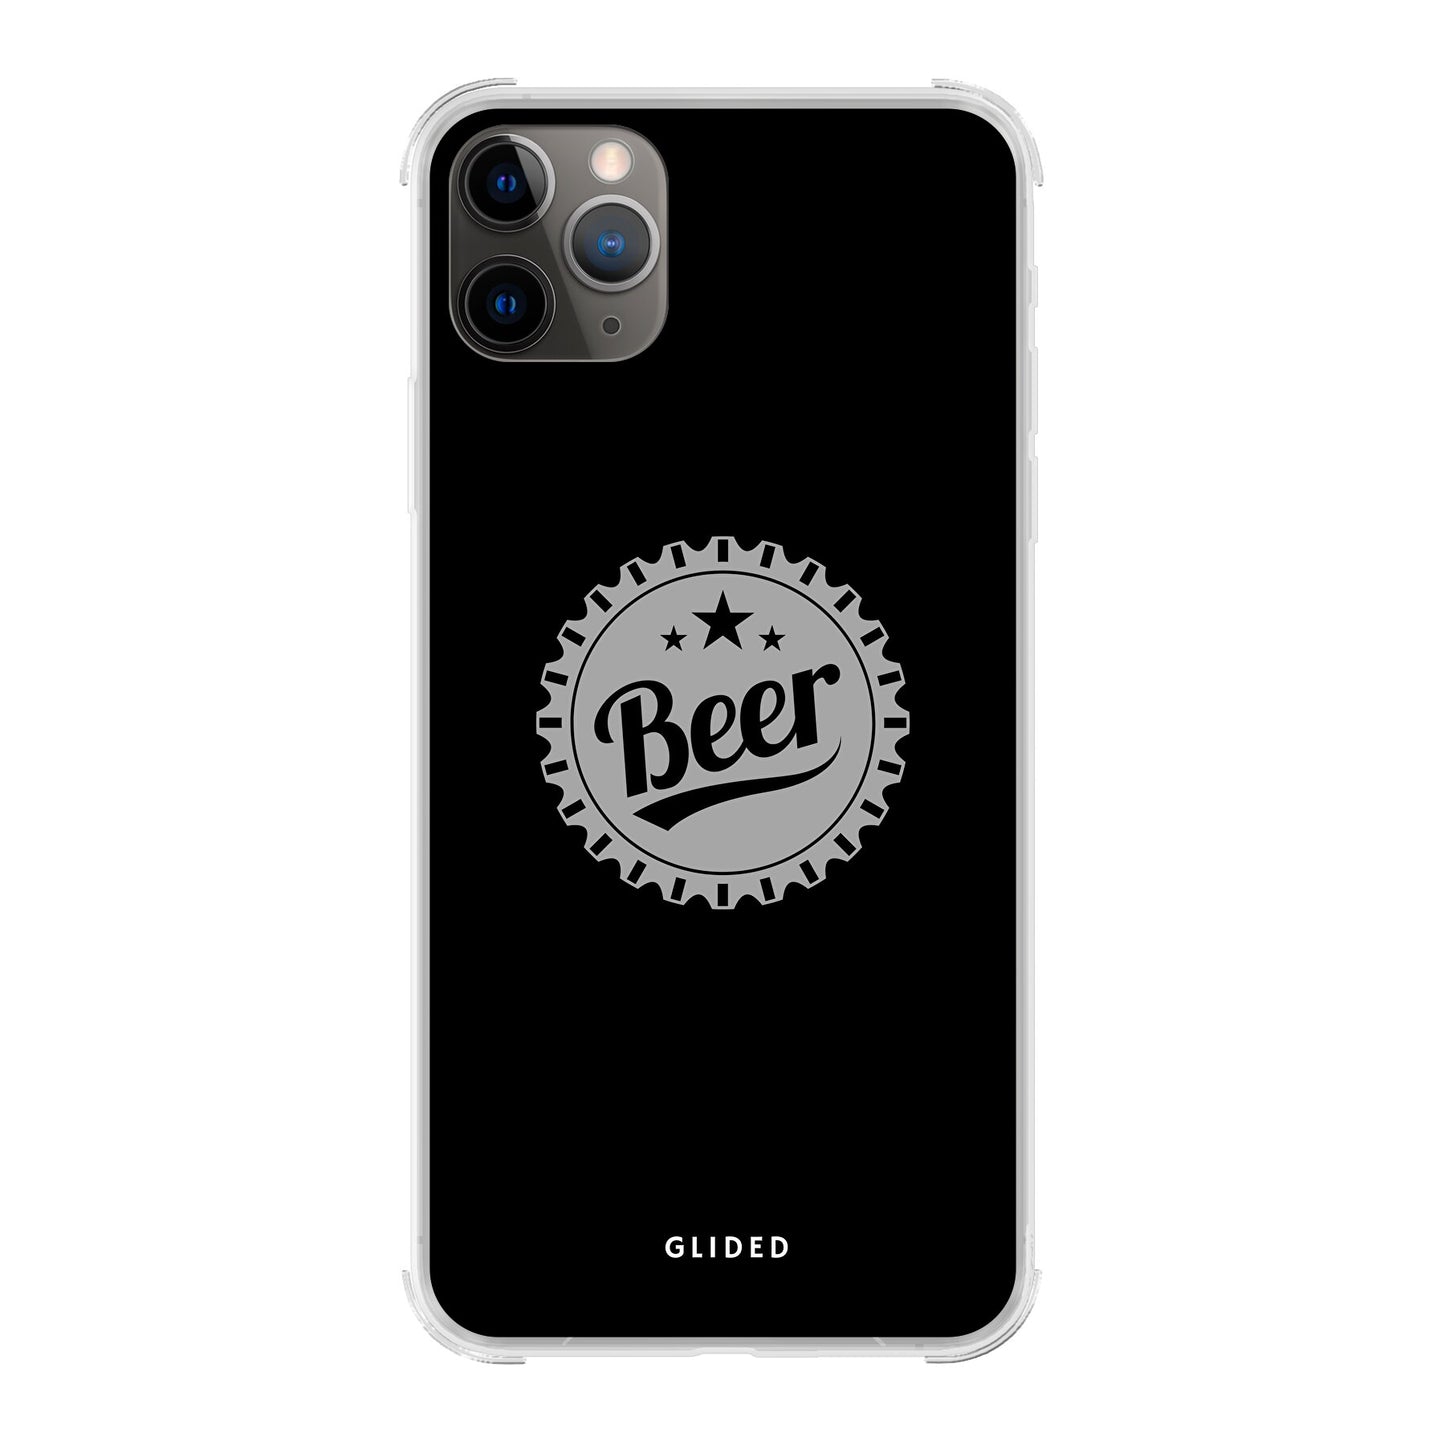 Cheers - iPhone 11 Pro Max - Bumper case